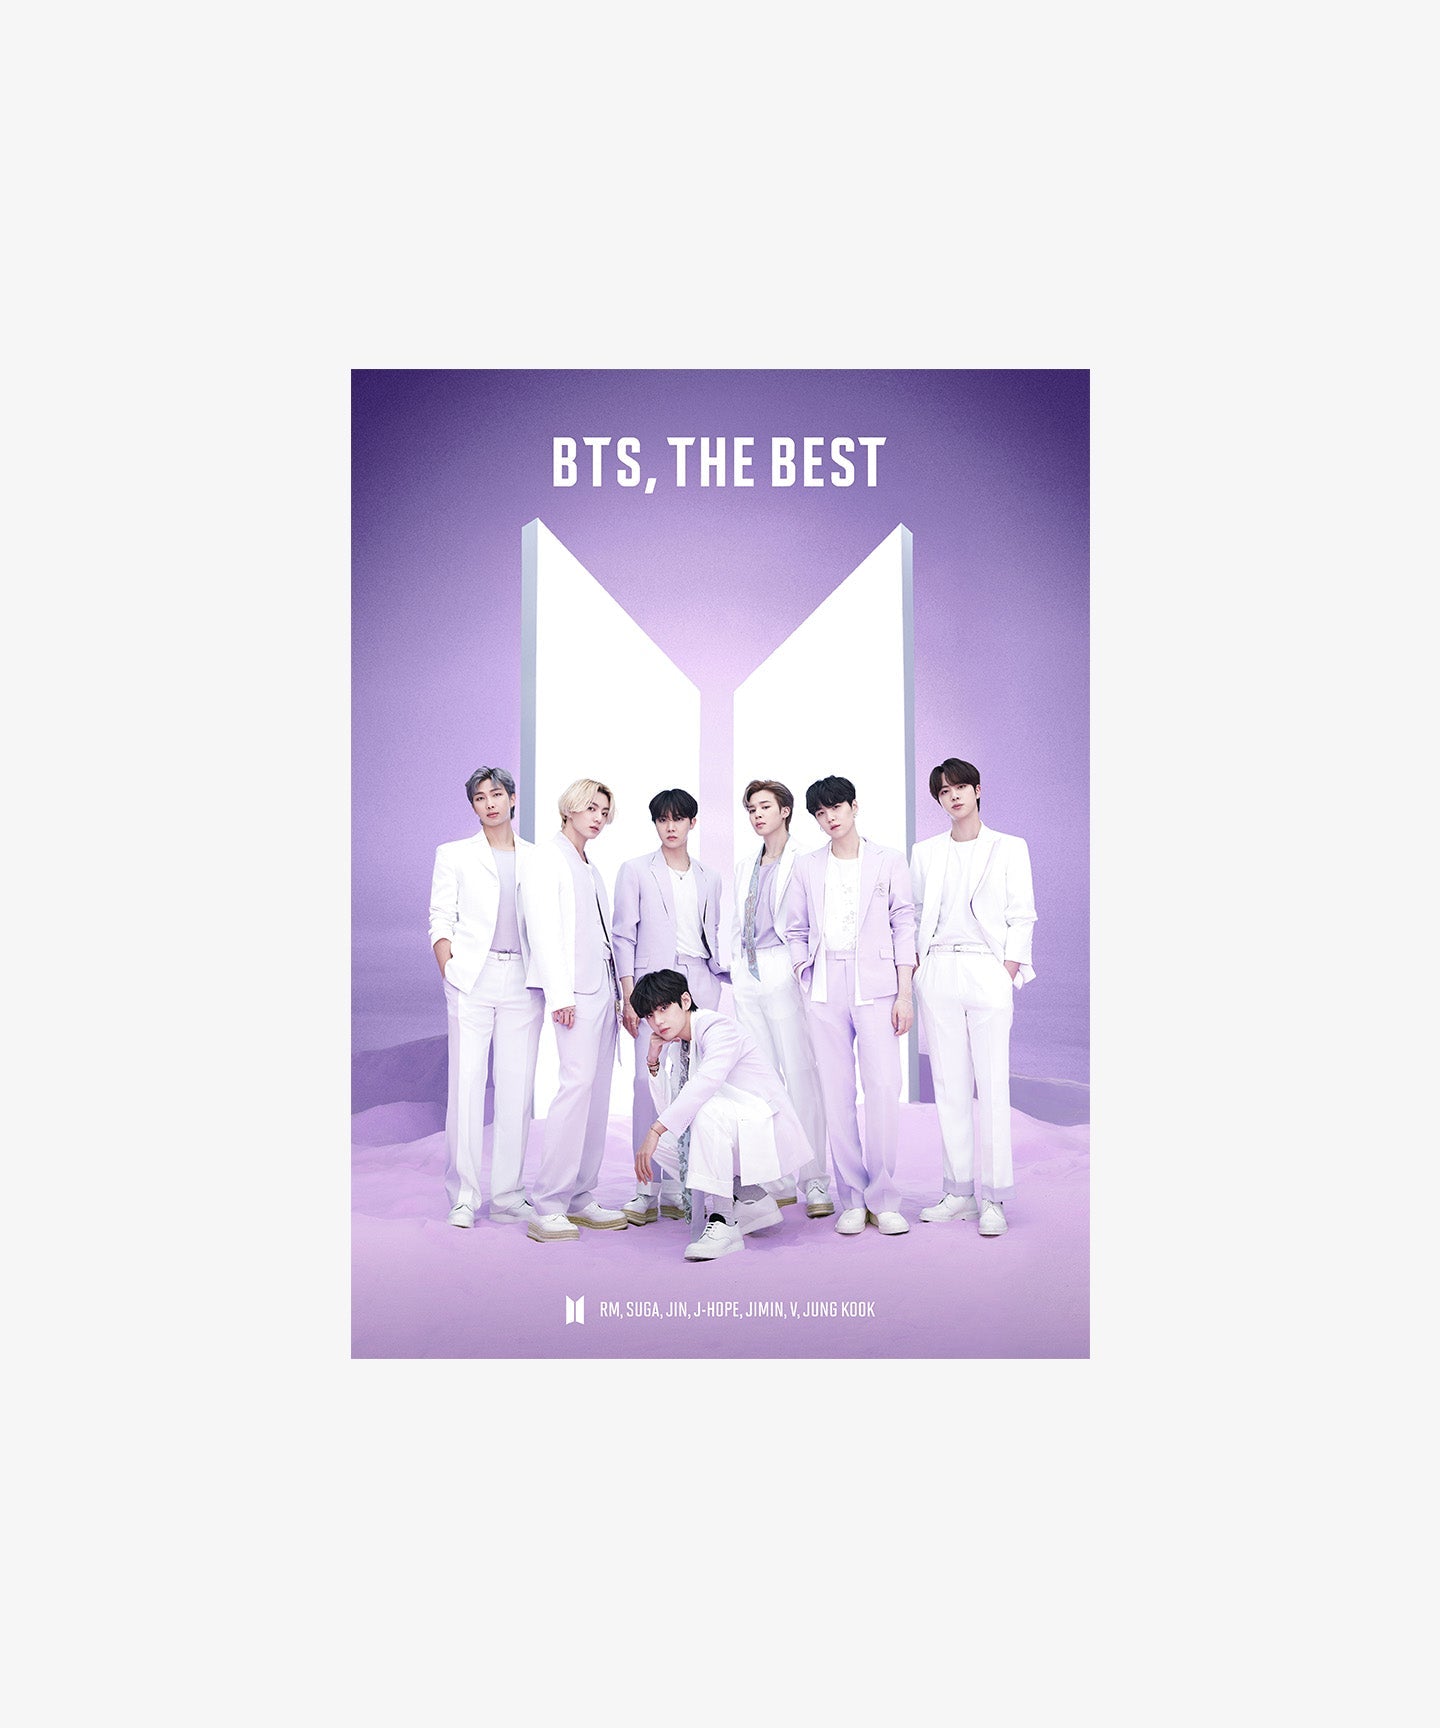 BTS - The BEST (2nd Japanese Best Of Album)